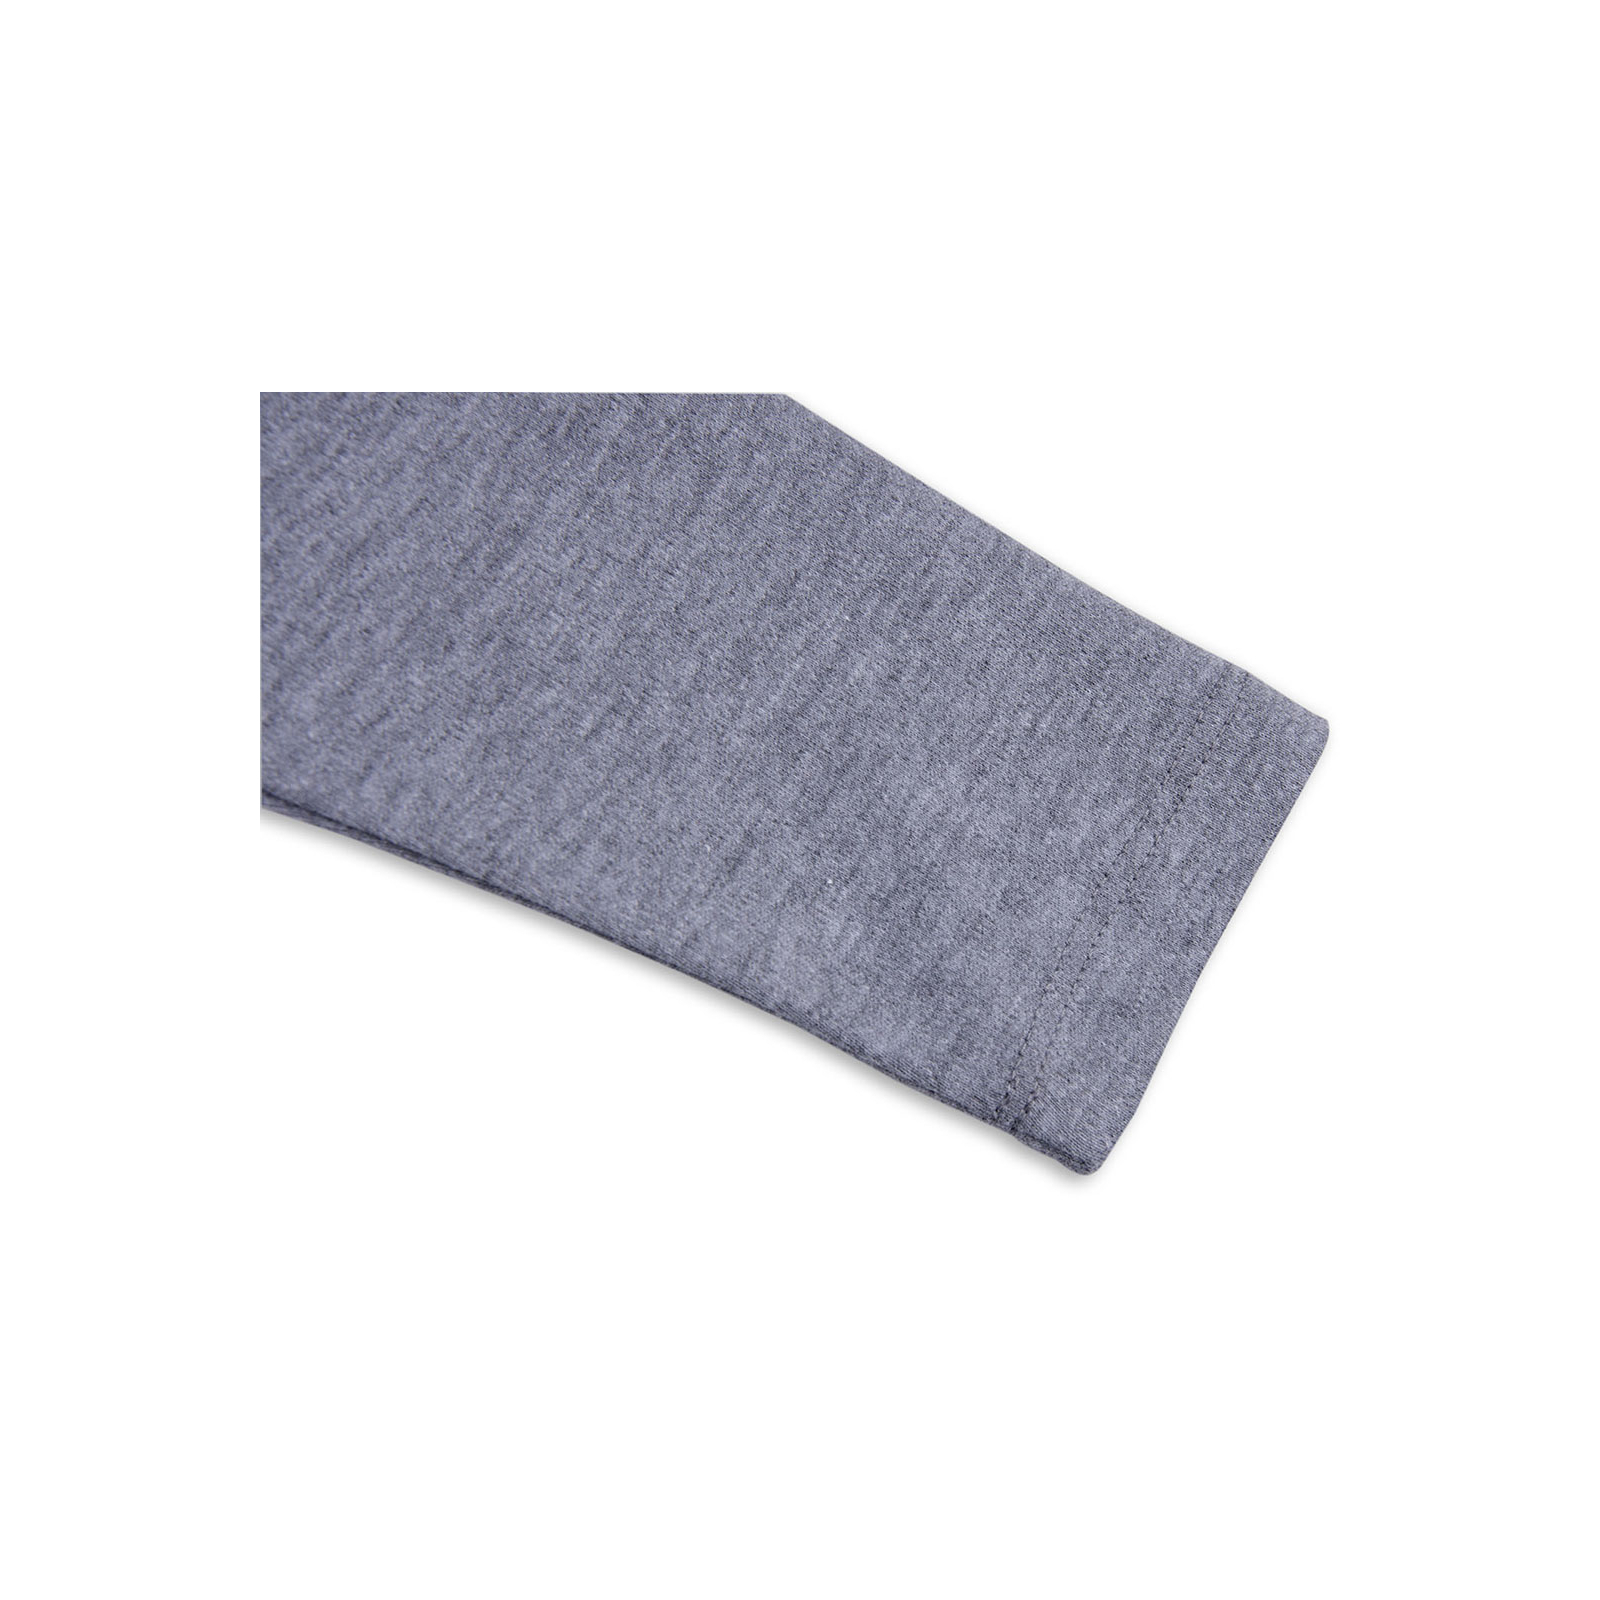 Кофта Lovetti водолазка серая меланжевая (1011-86-gray) изображение 4